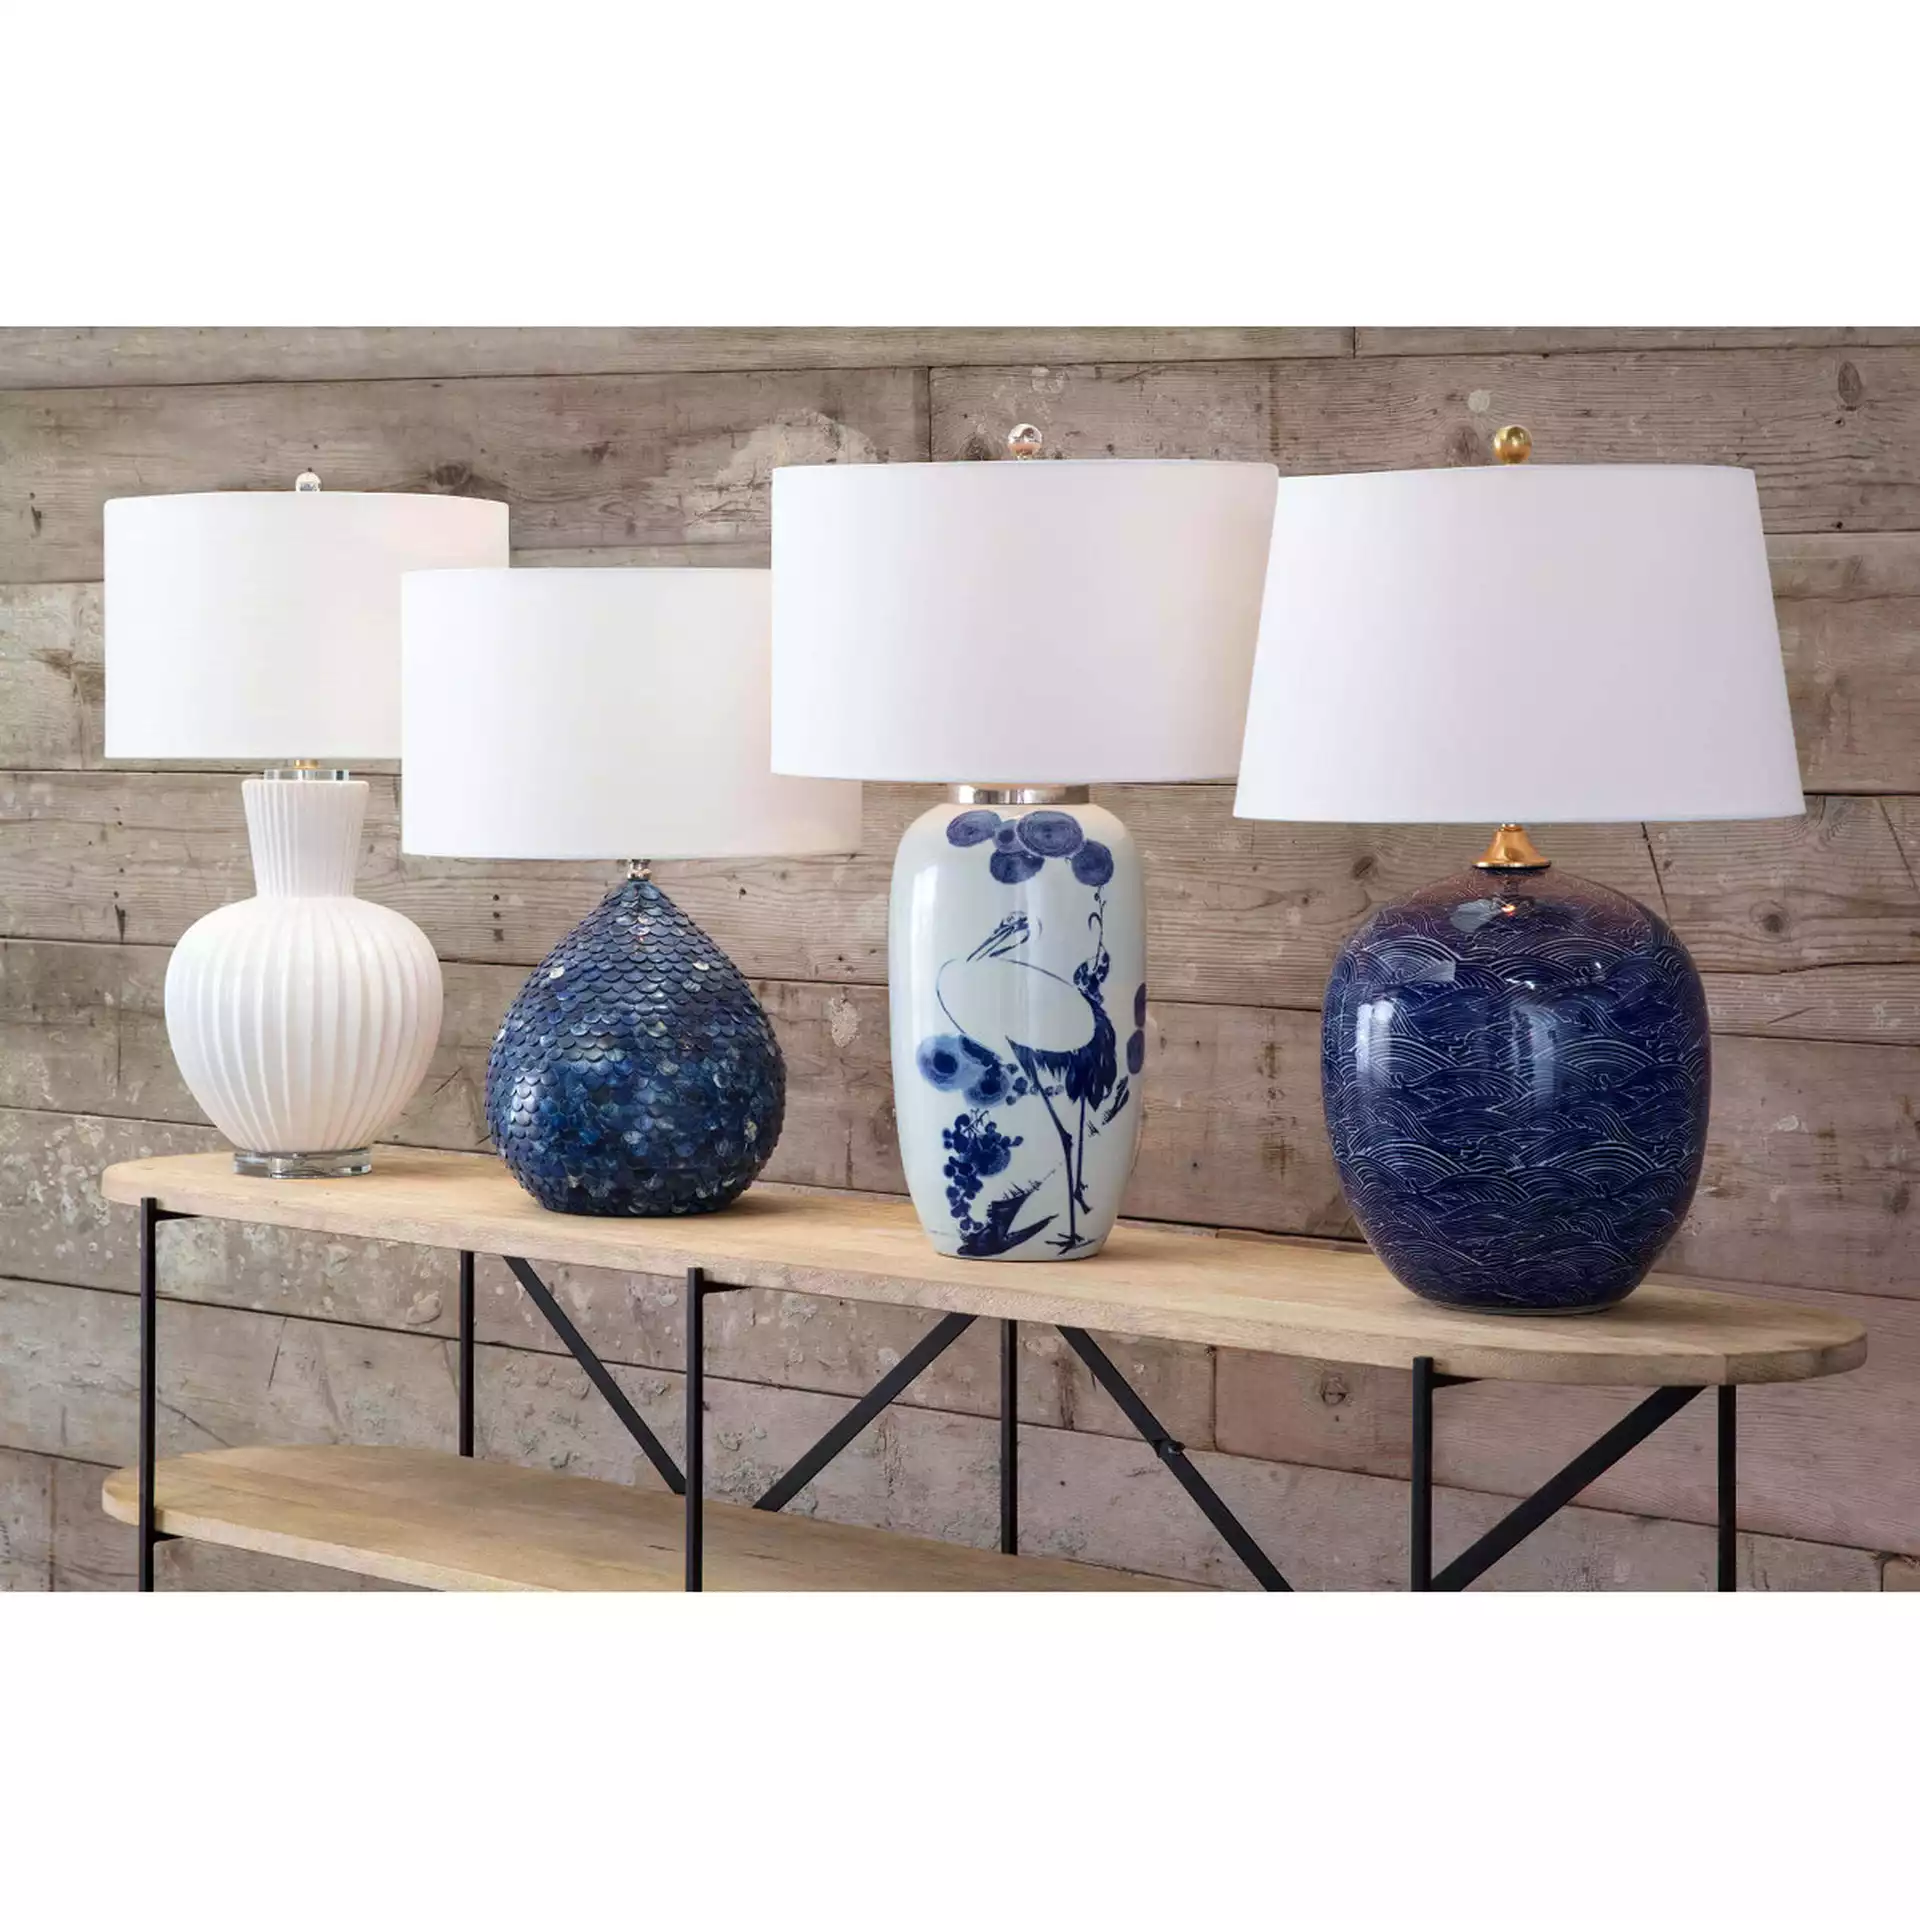 Cainan Global Bazaar White Shade Blue Crane Ceramic Table Lamp